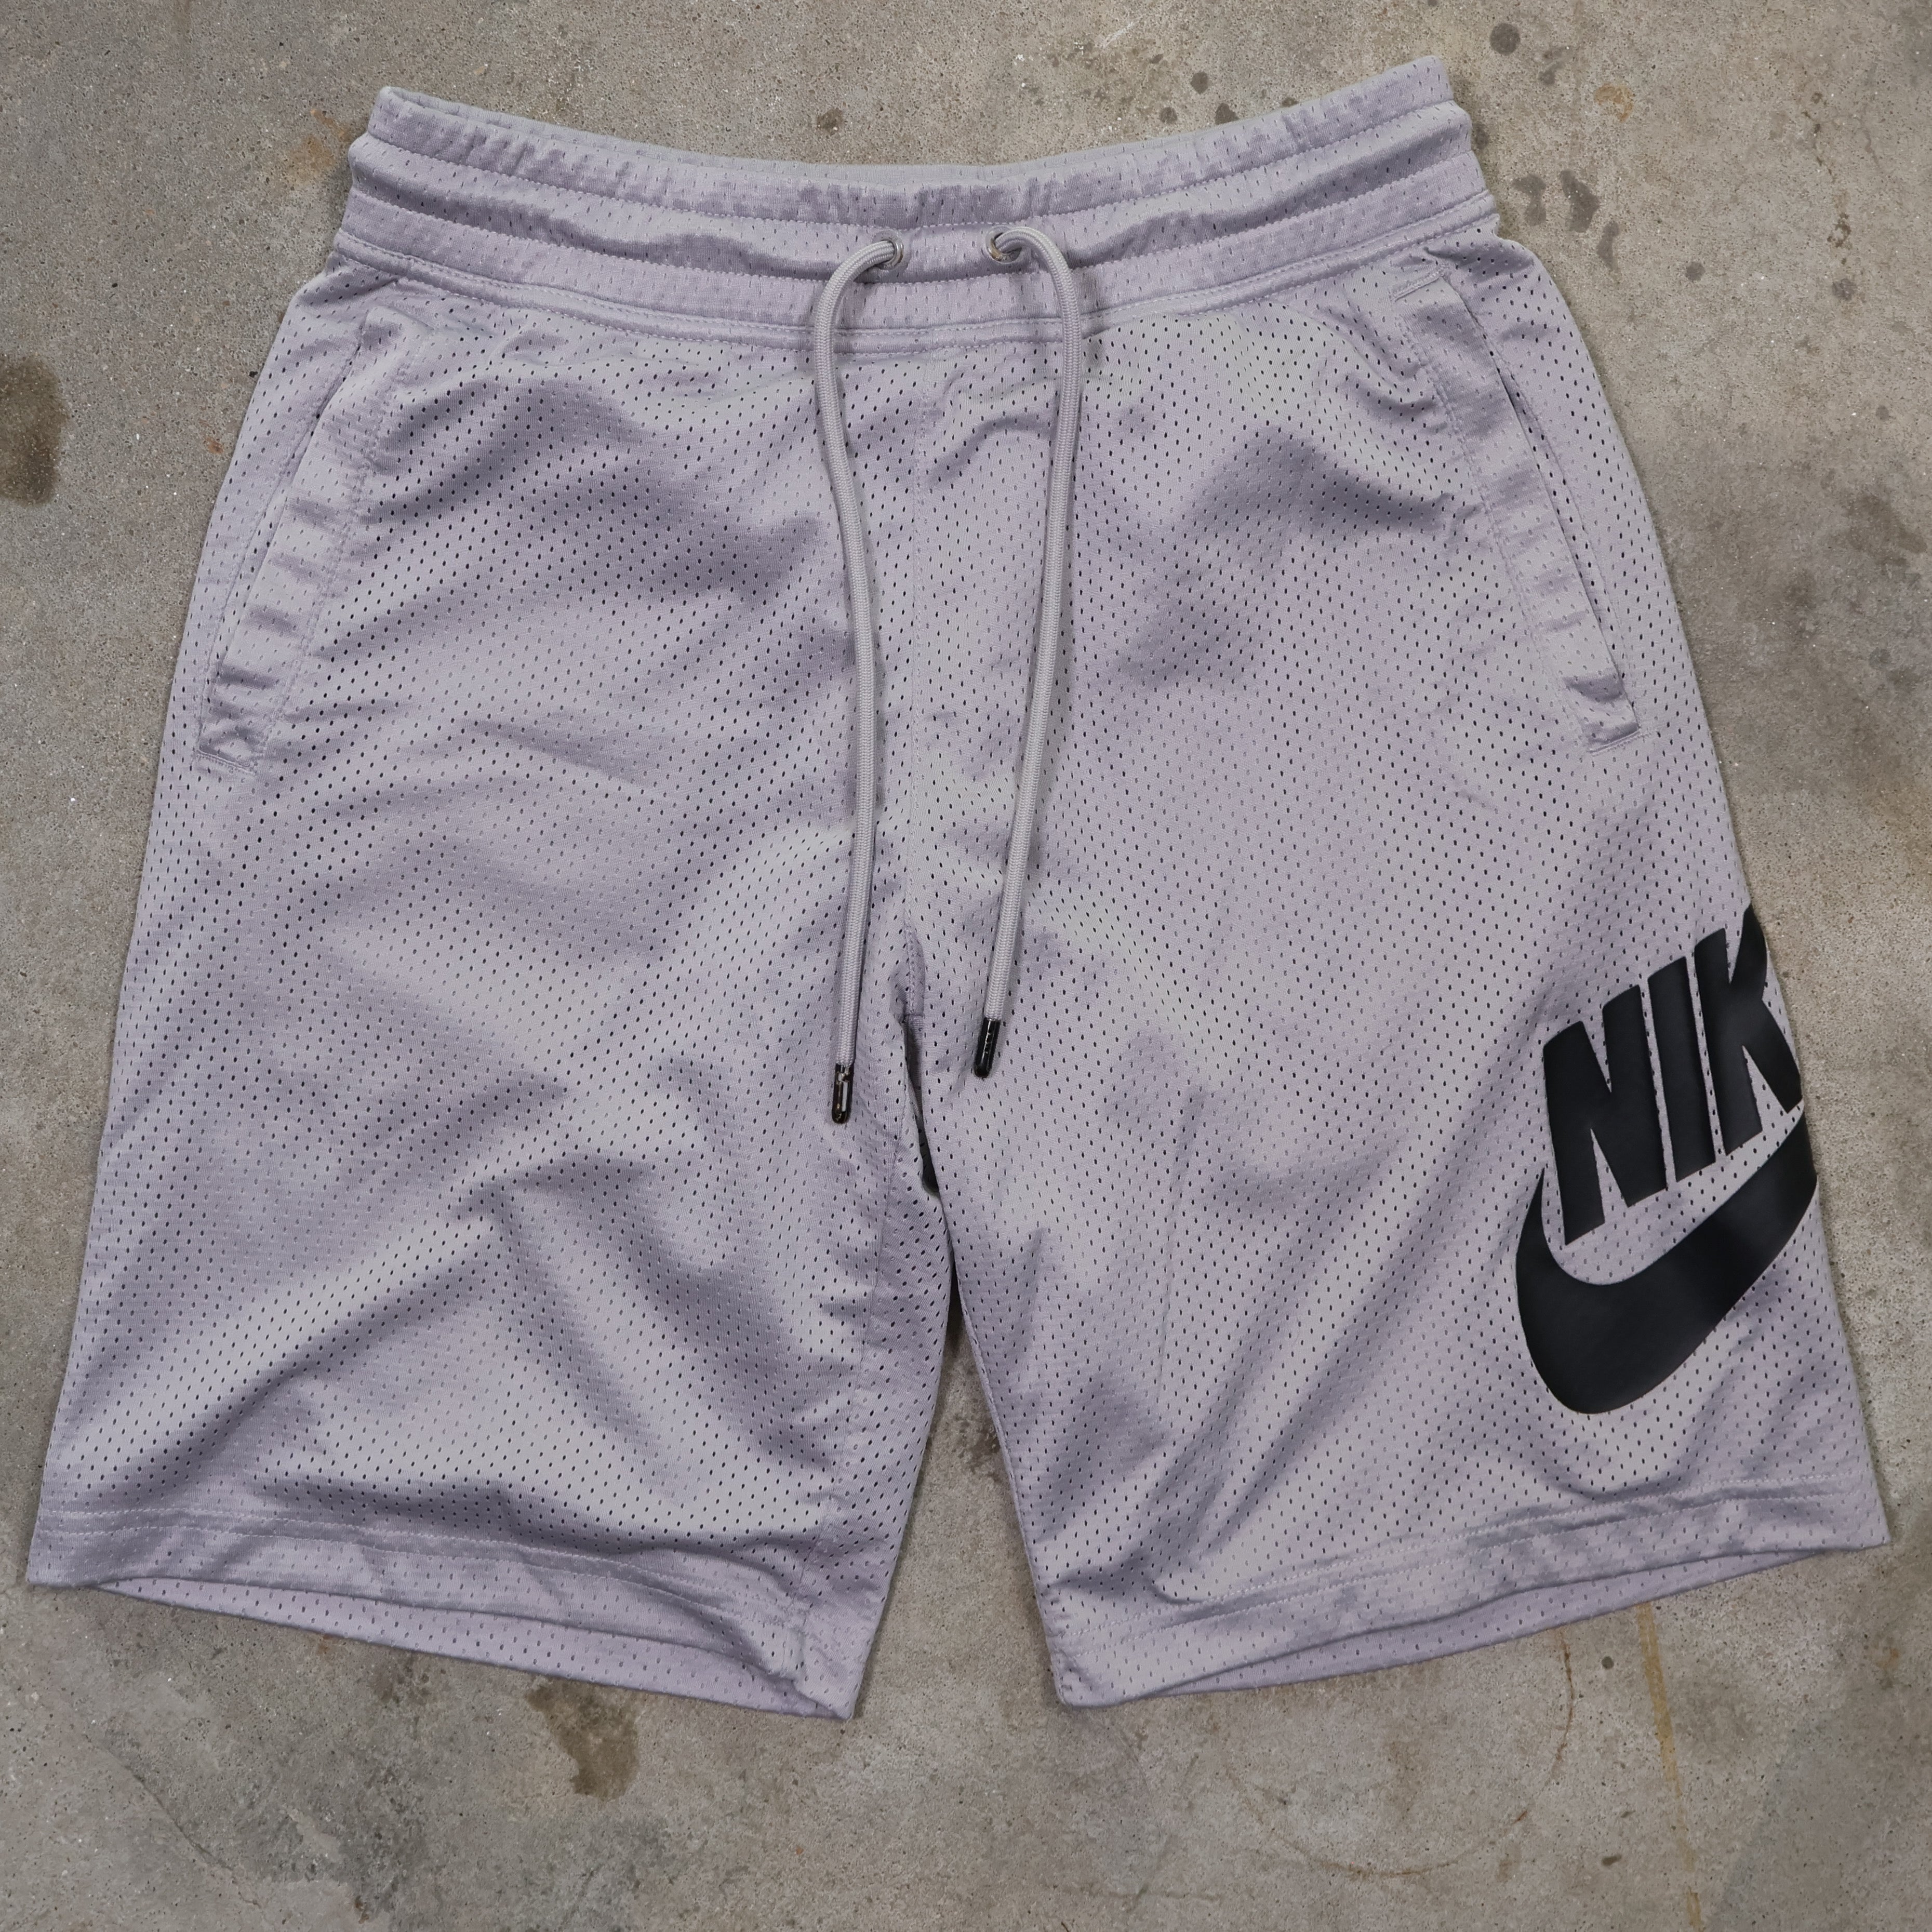 Silver Nike Mesh Shorts (Medium)